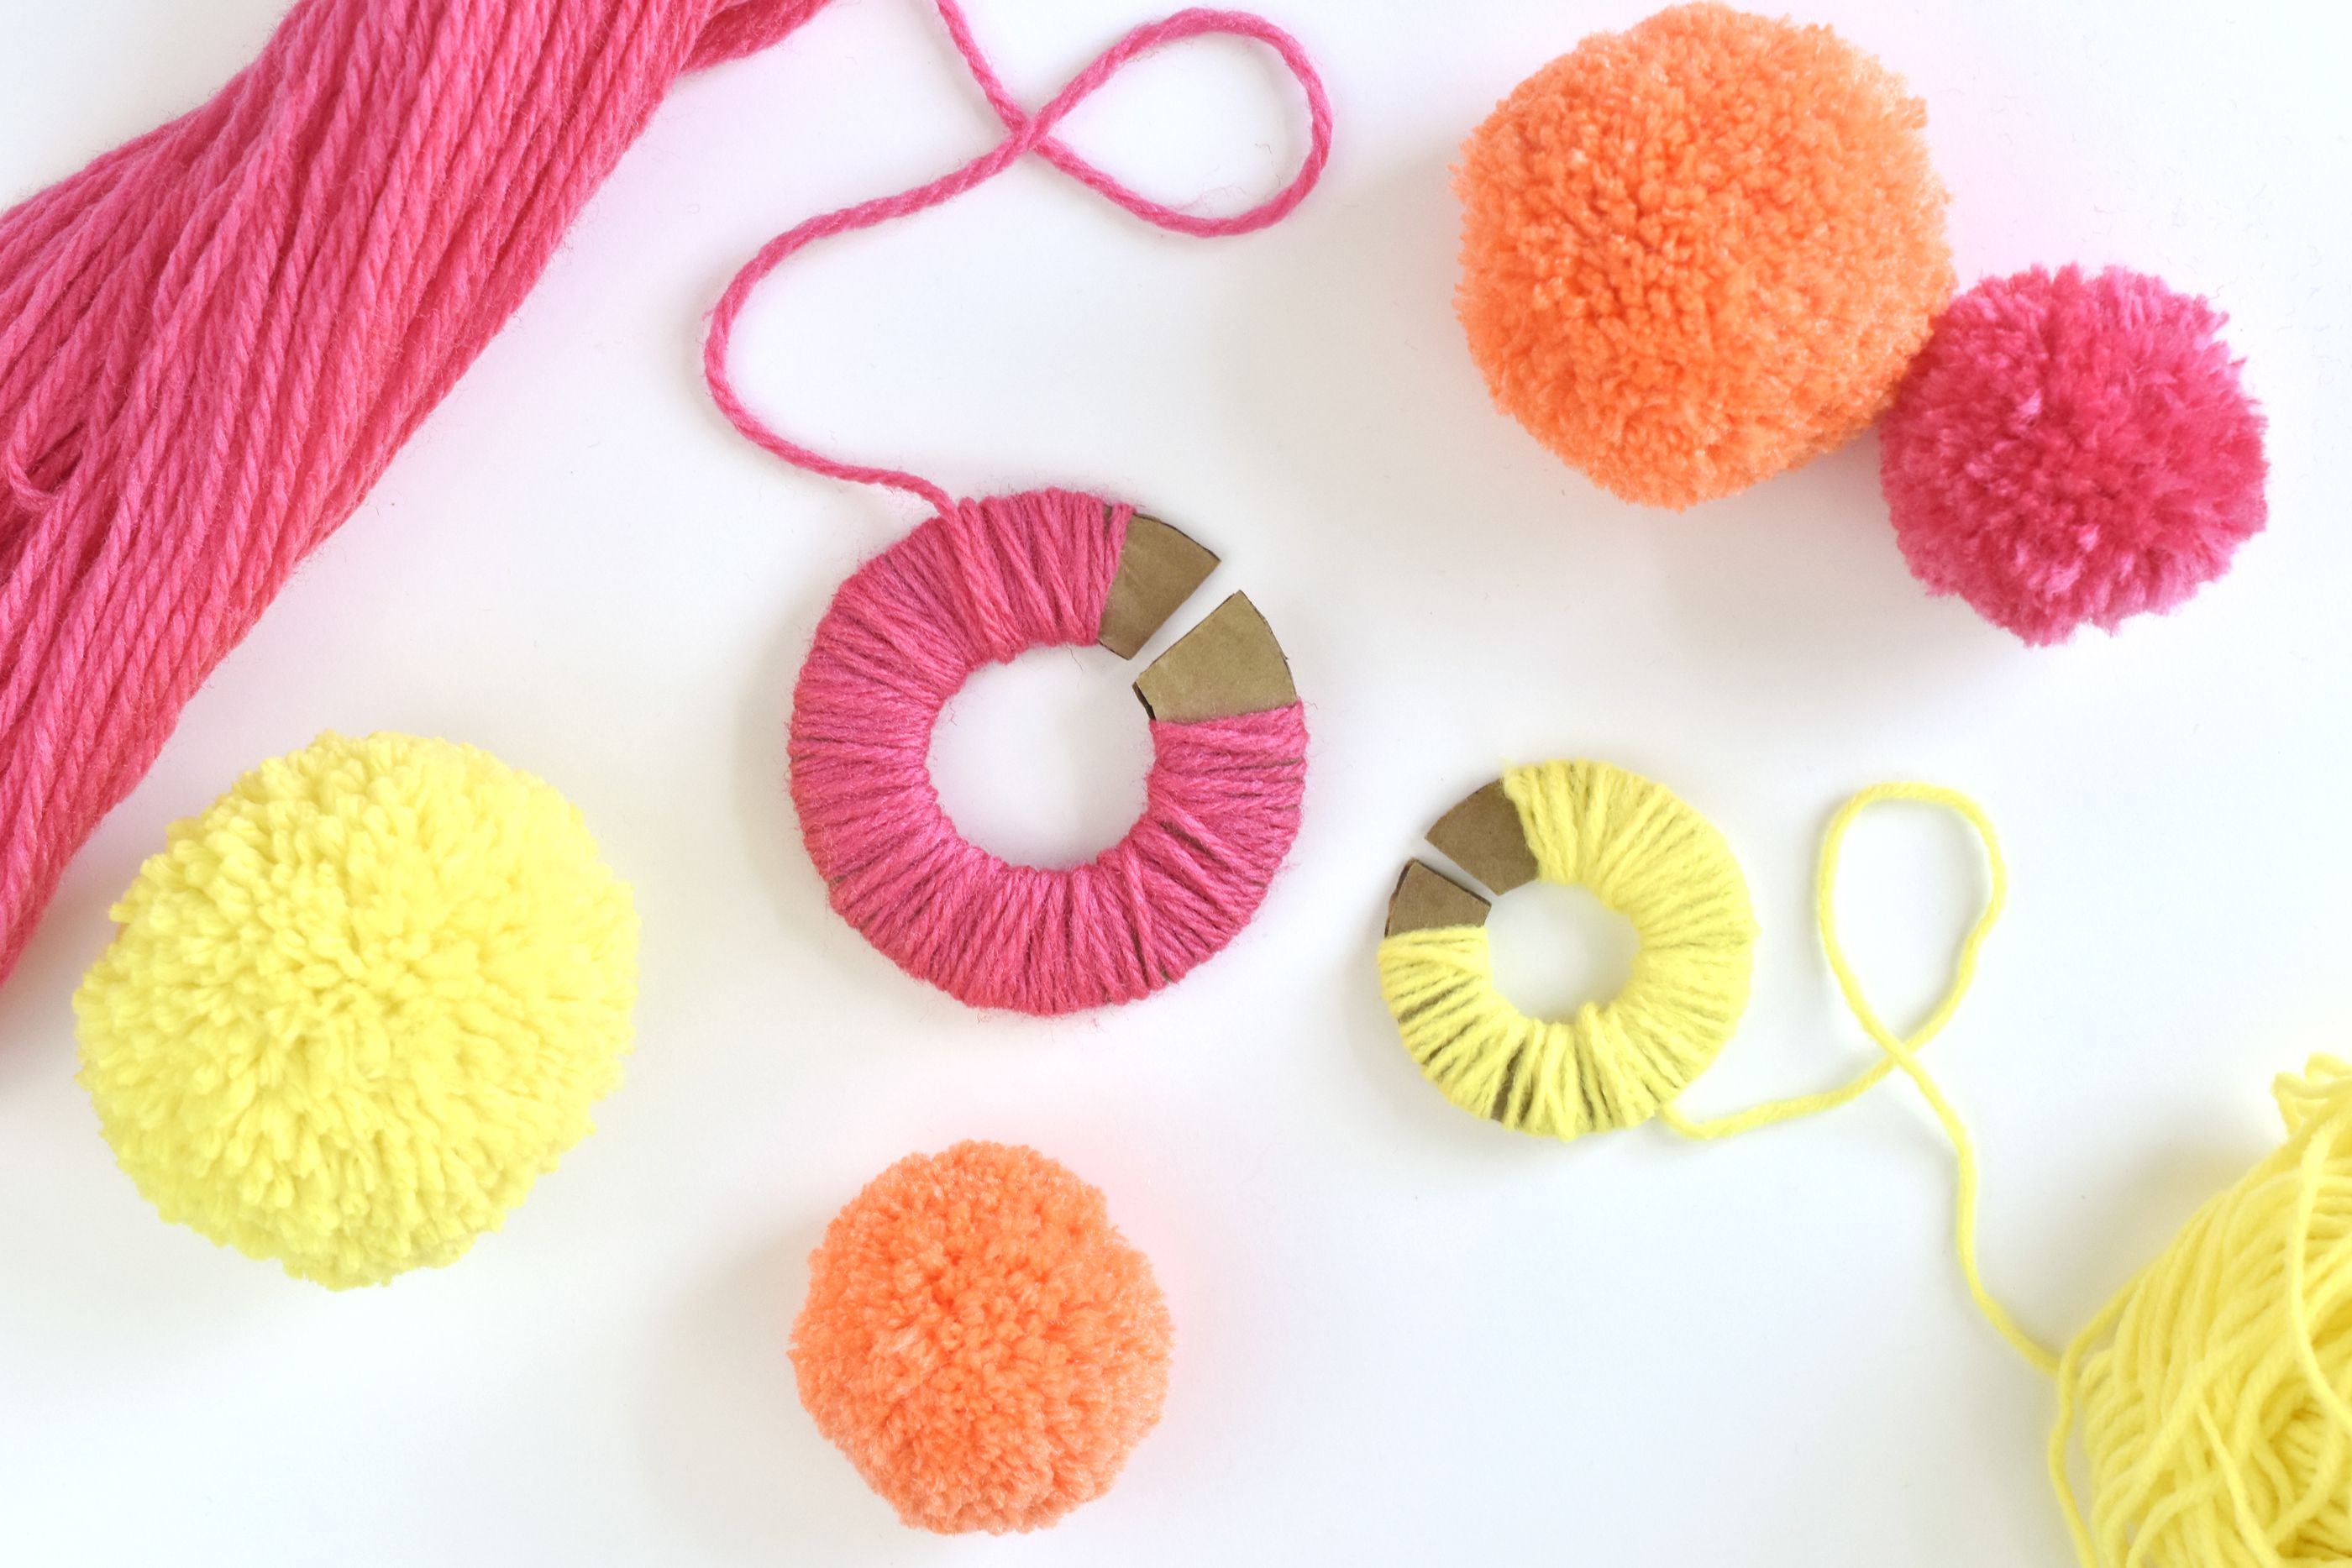 How to Make Custom Yarn PomPoms